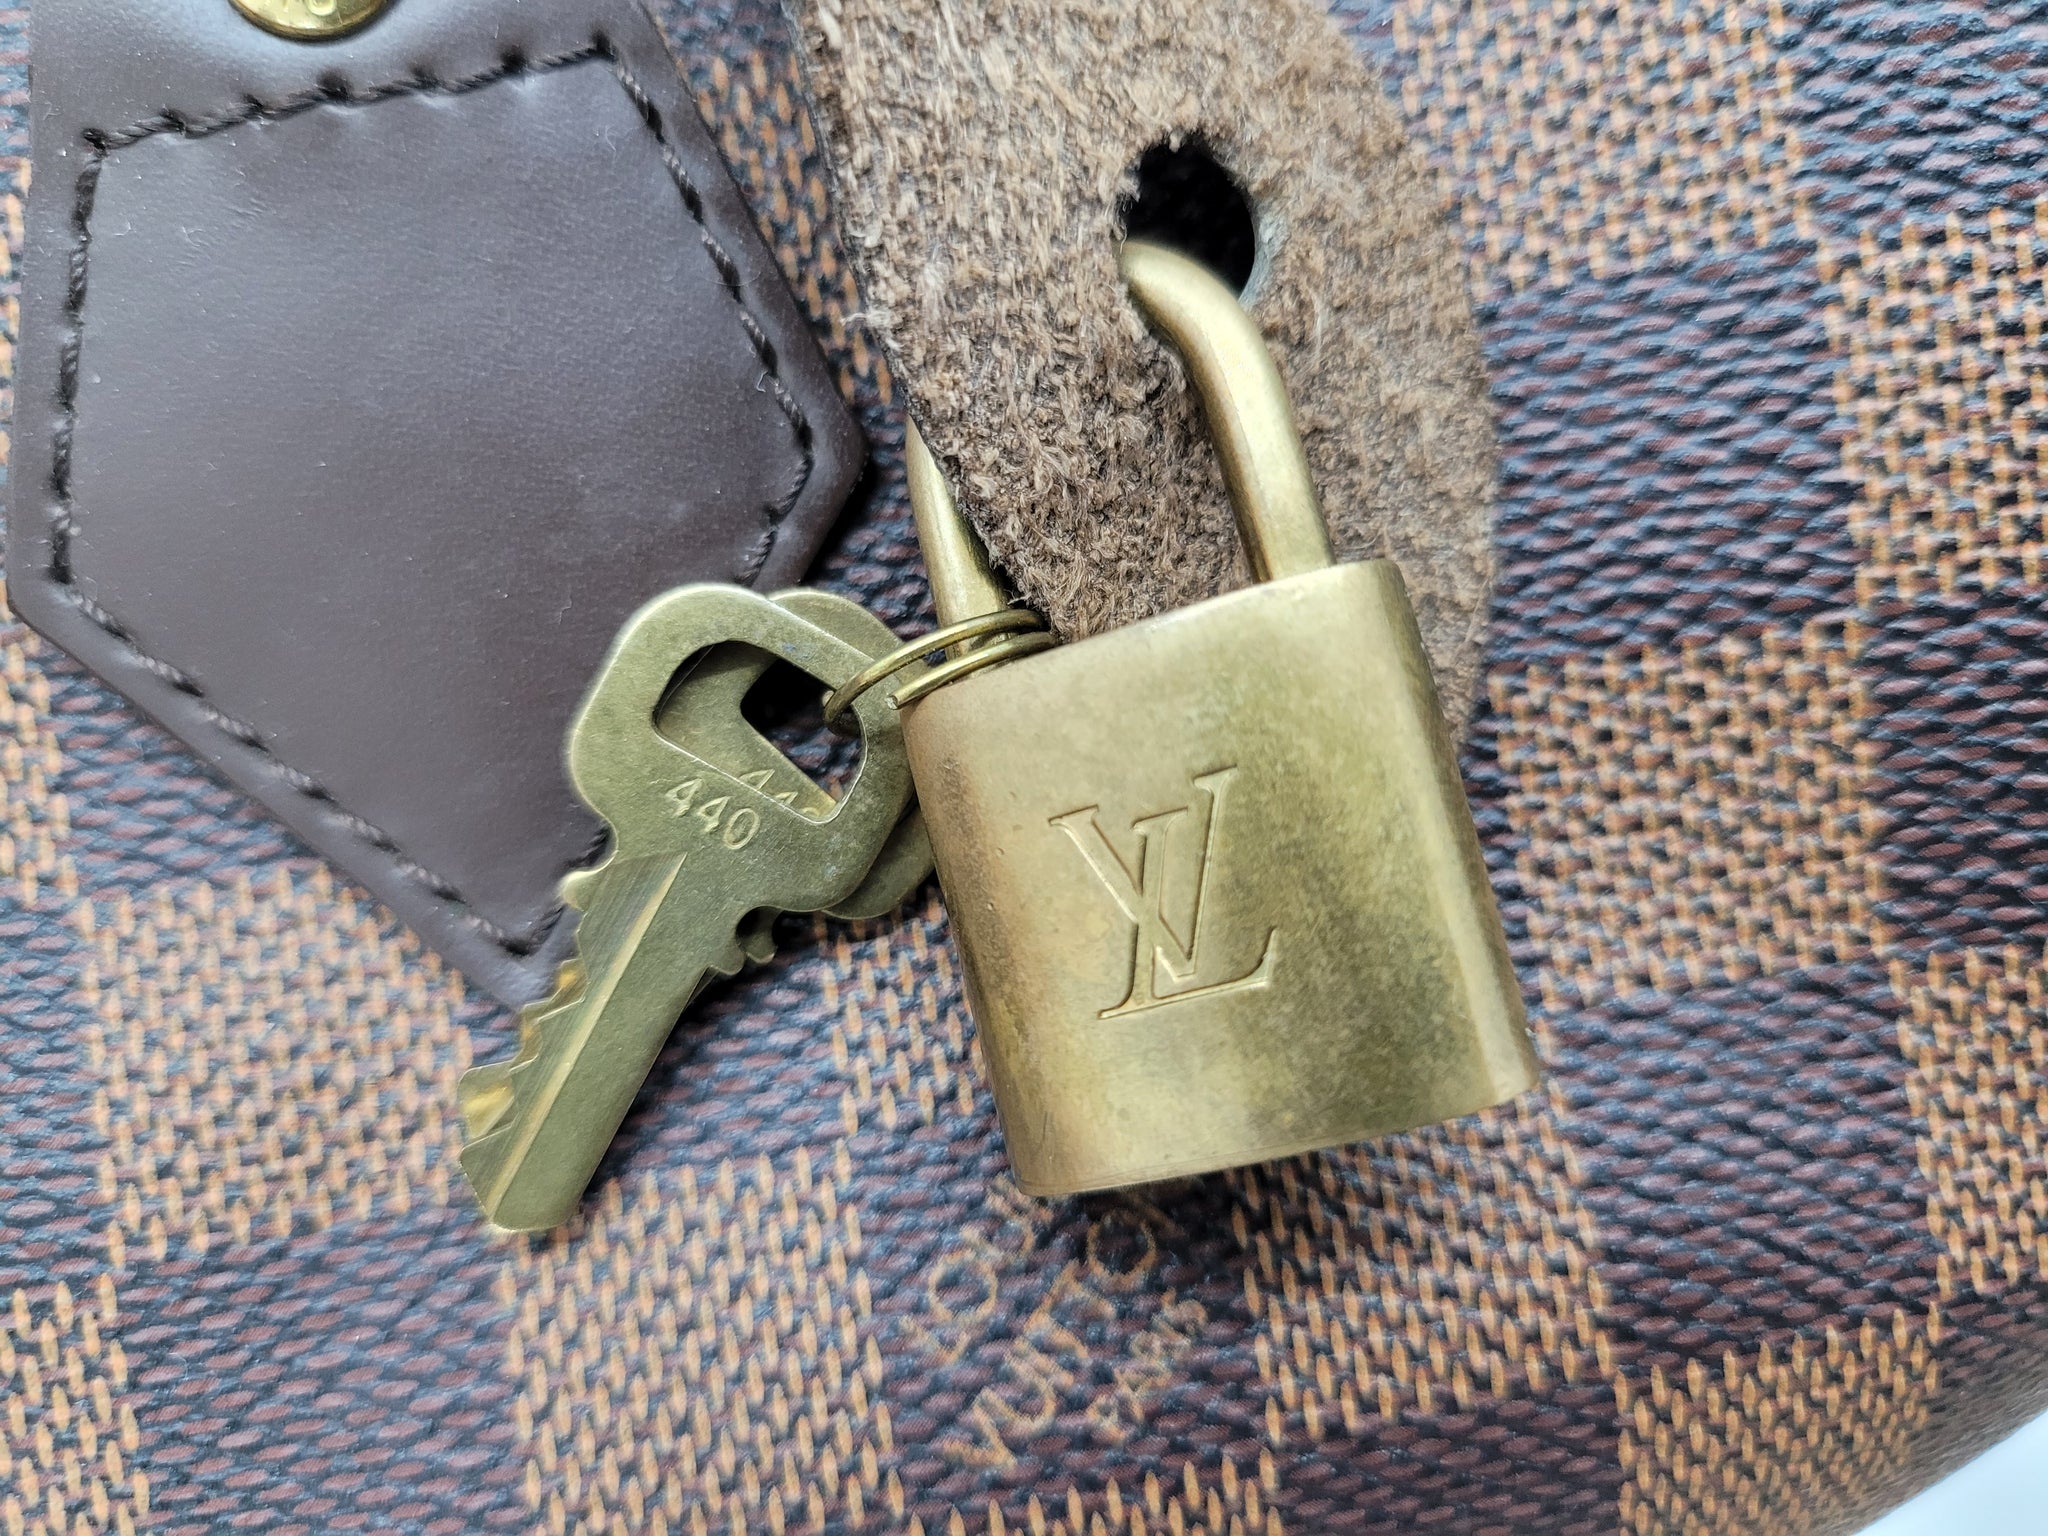 Louis Vuitton Monogram Speedy 30 With Lock And Key - Colorado Pawn